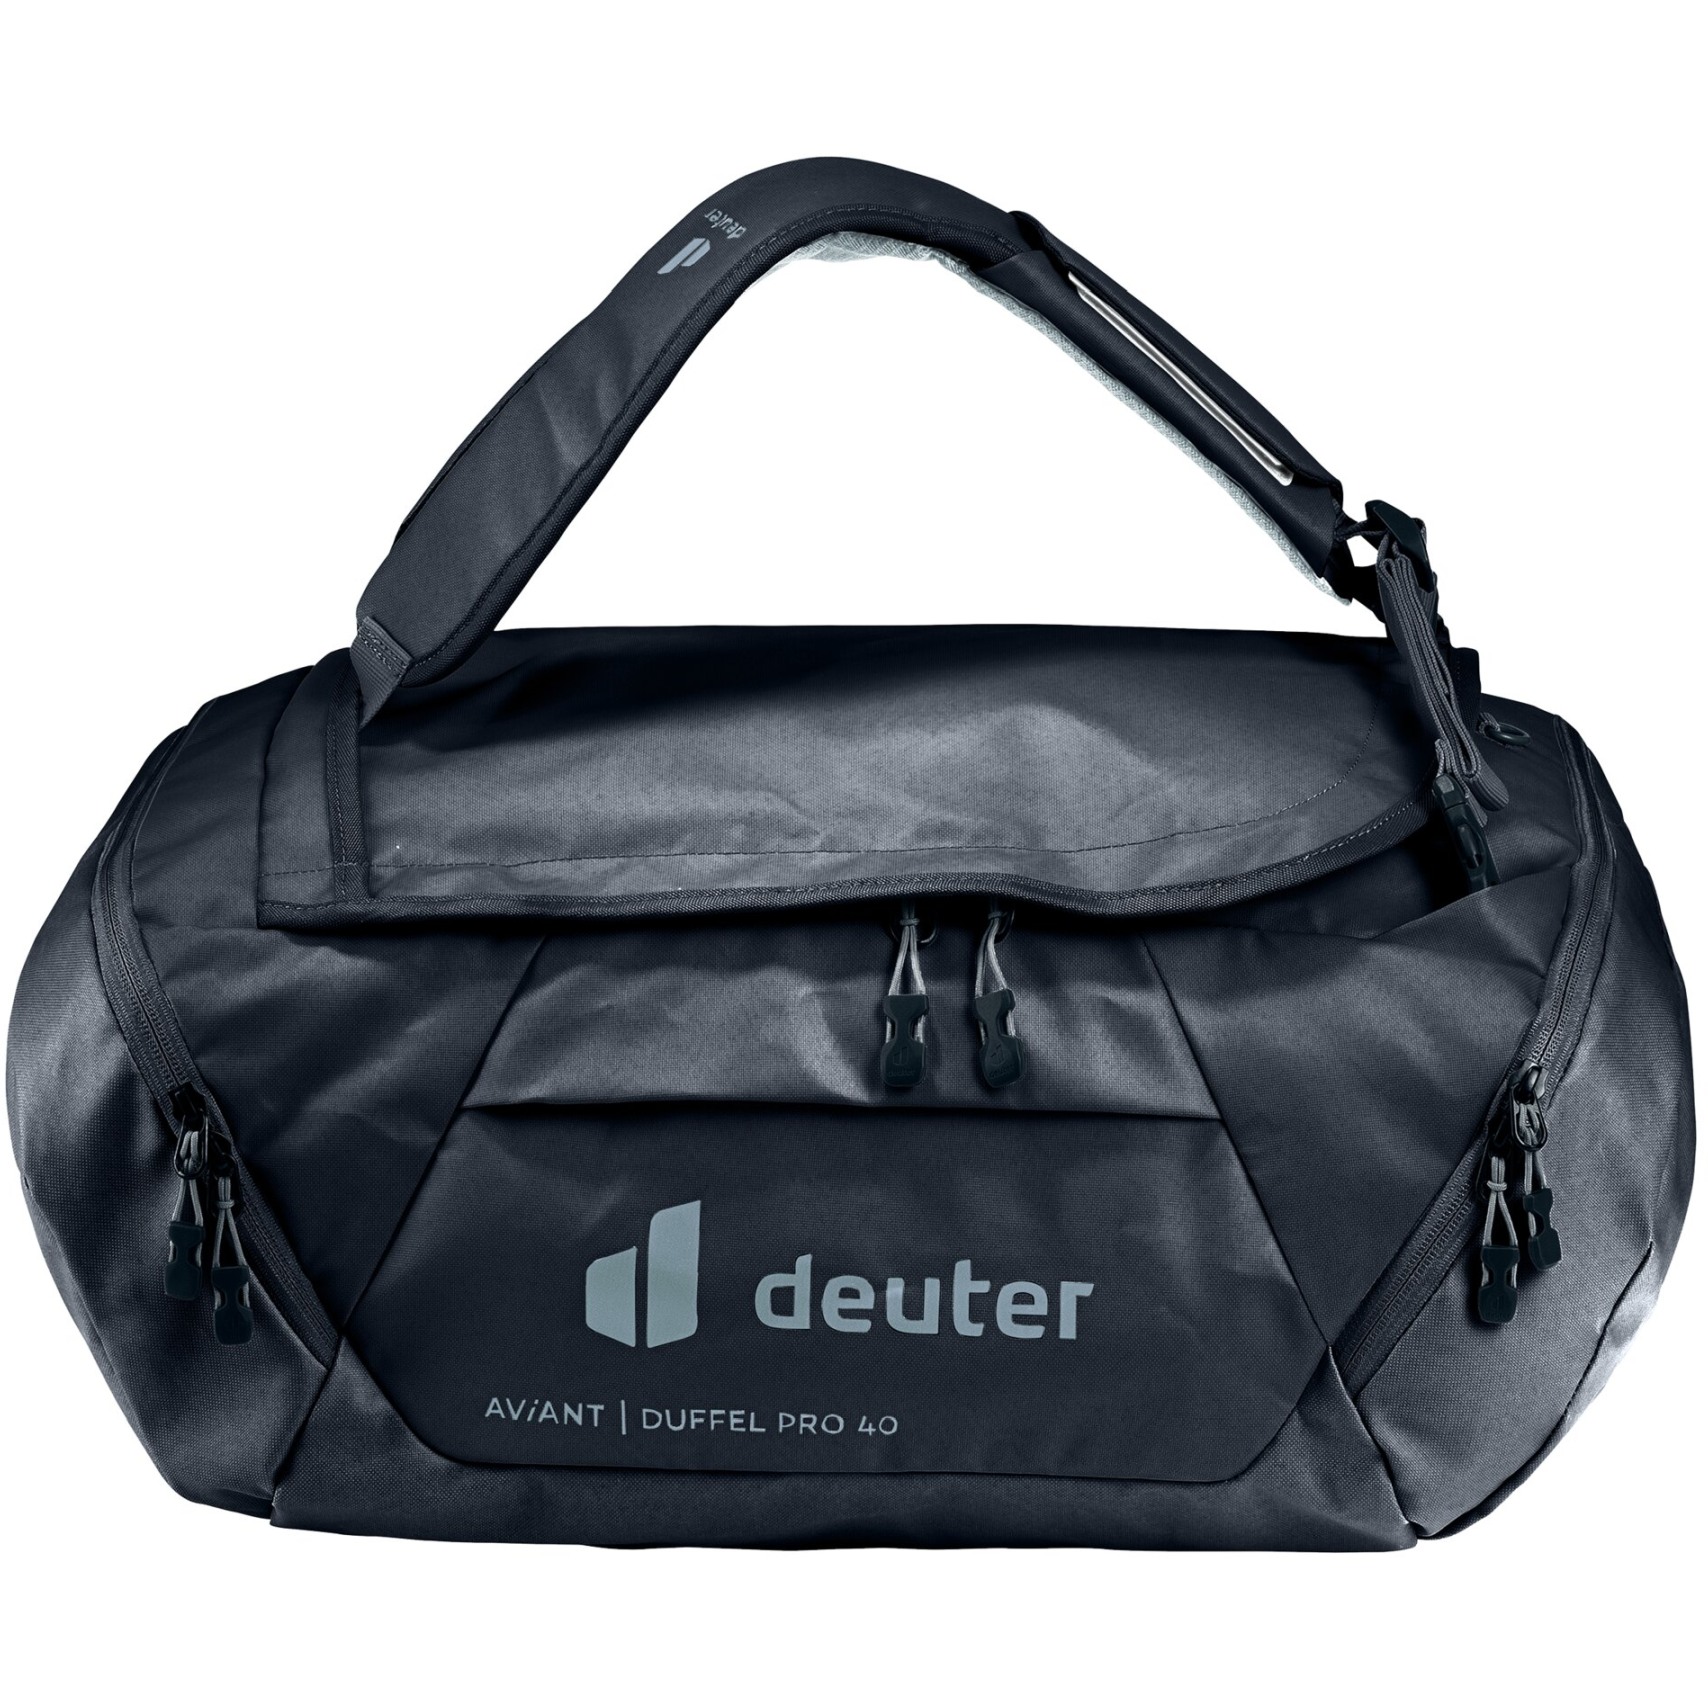 Reisetasche 40 AViANT | Deuter Pro - schwarz BIKE24 Duffel